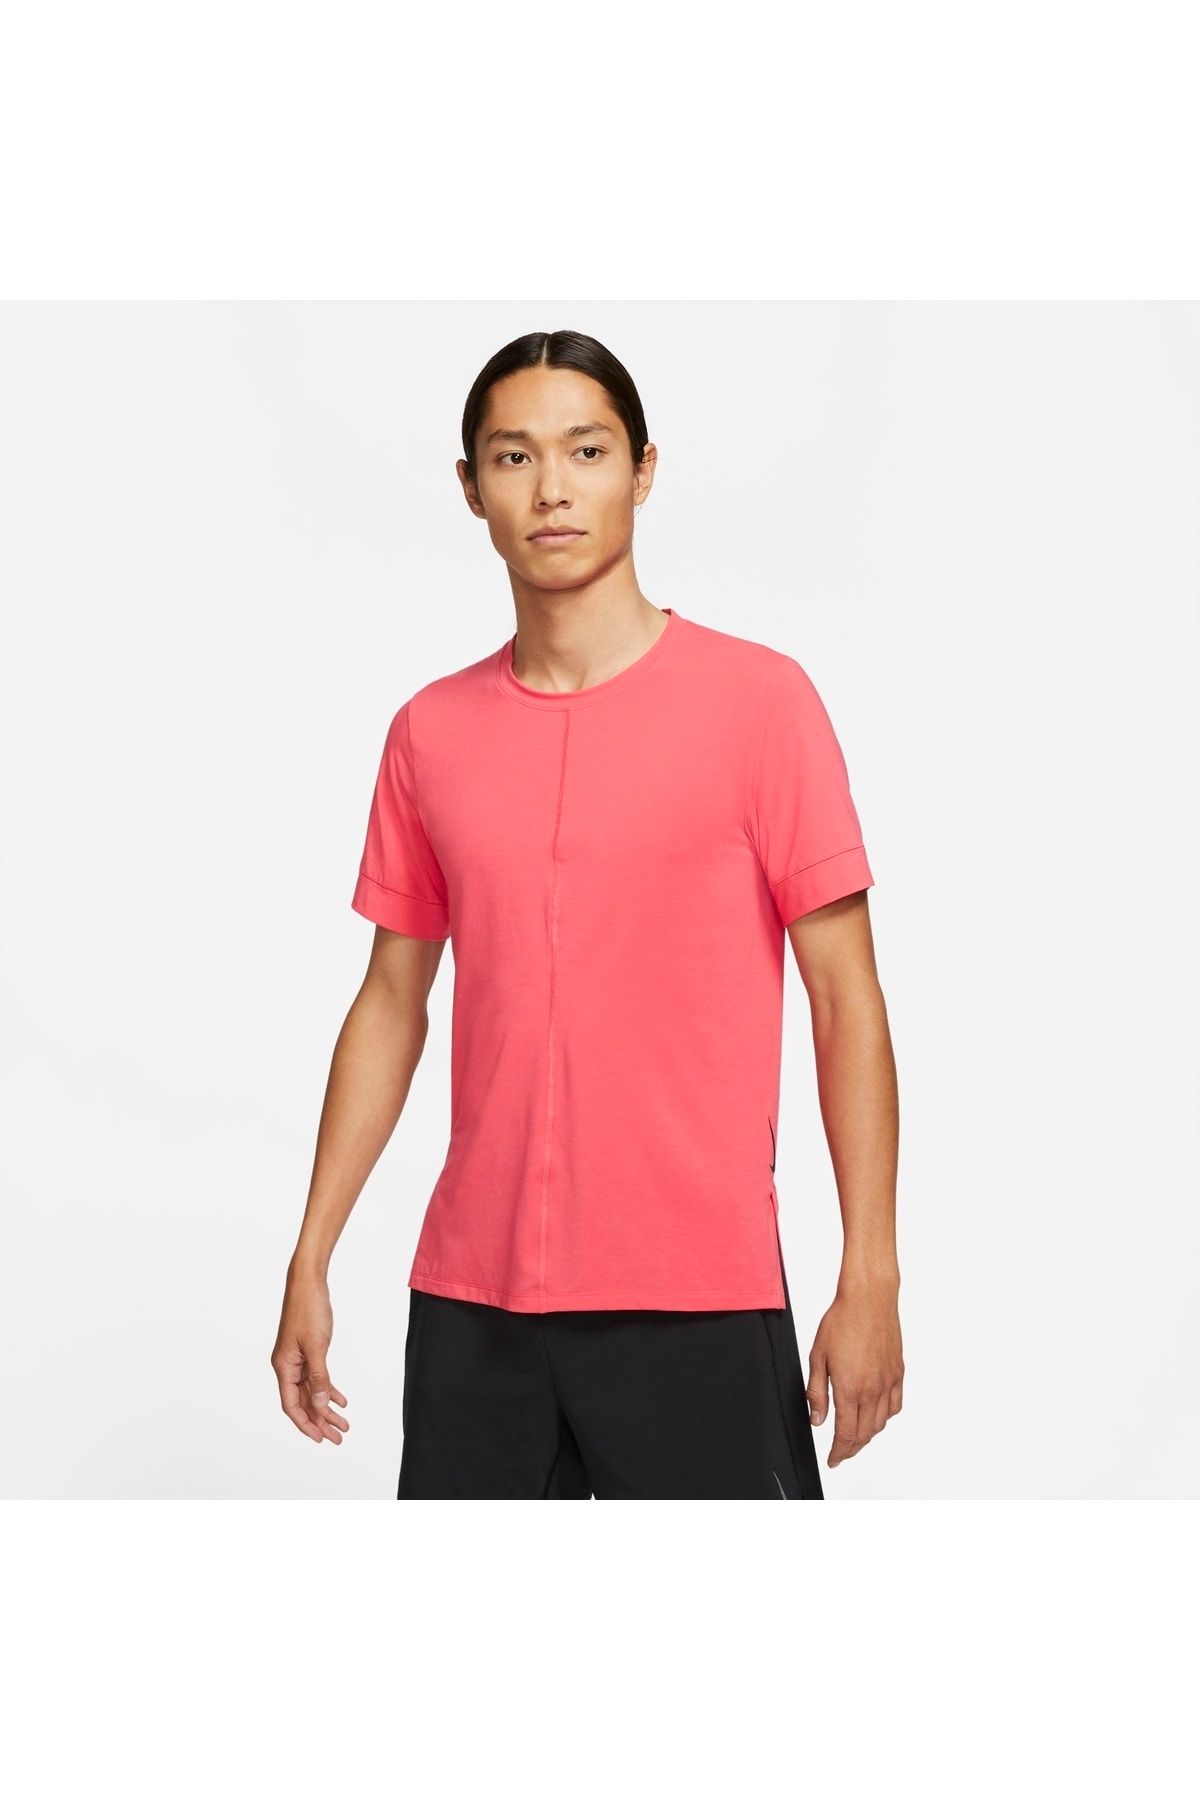 Nike Yoga Dri-fit Short-sleeve Top Men's T-Shirt Bv4034-646 Slim